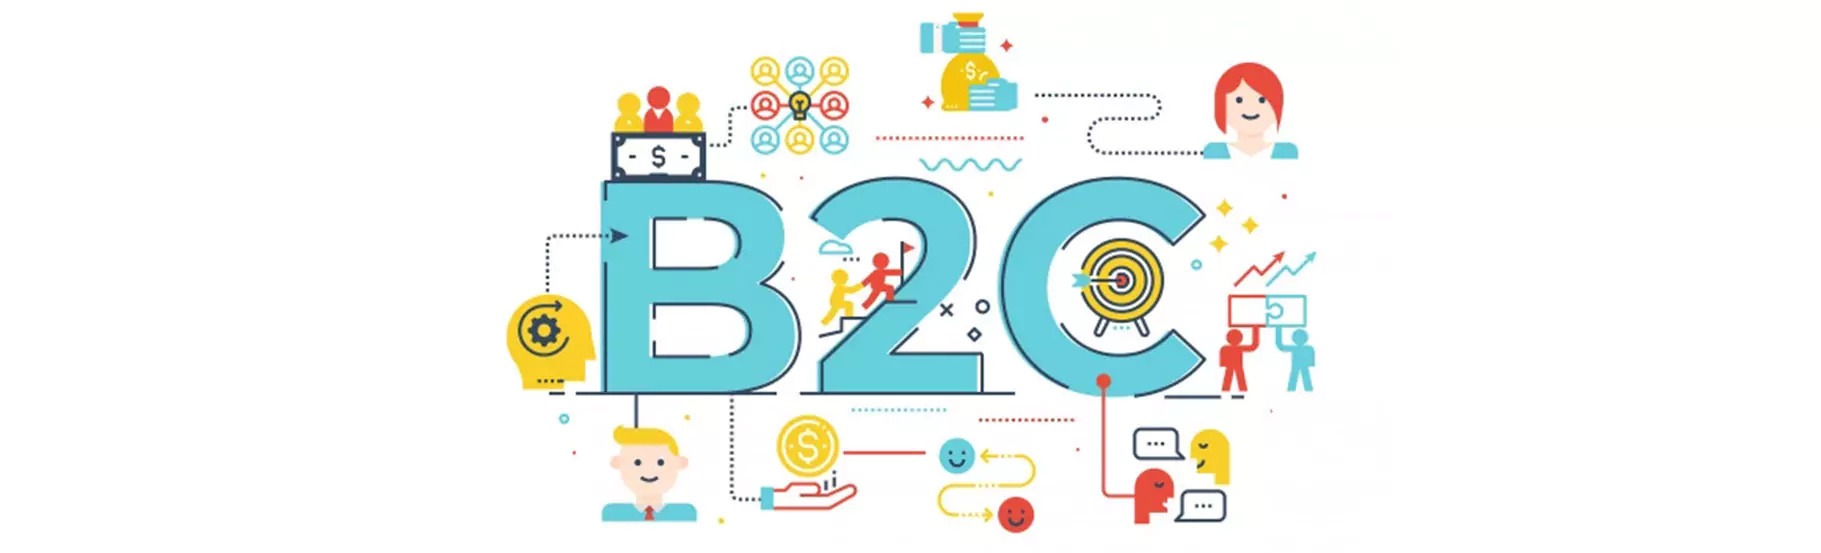 b2c-gco-business-to-consumer-pc